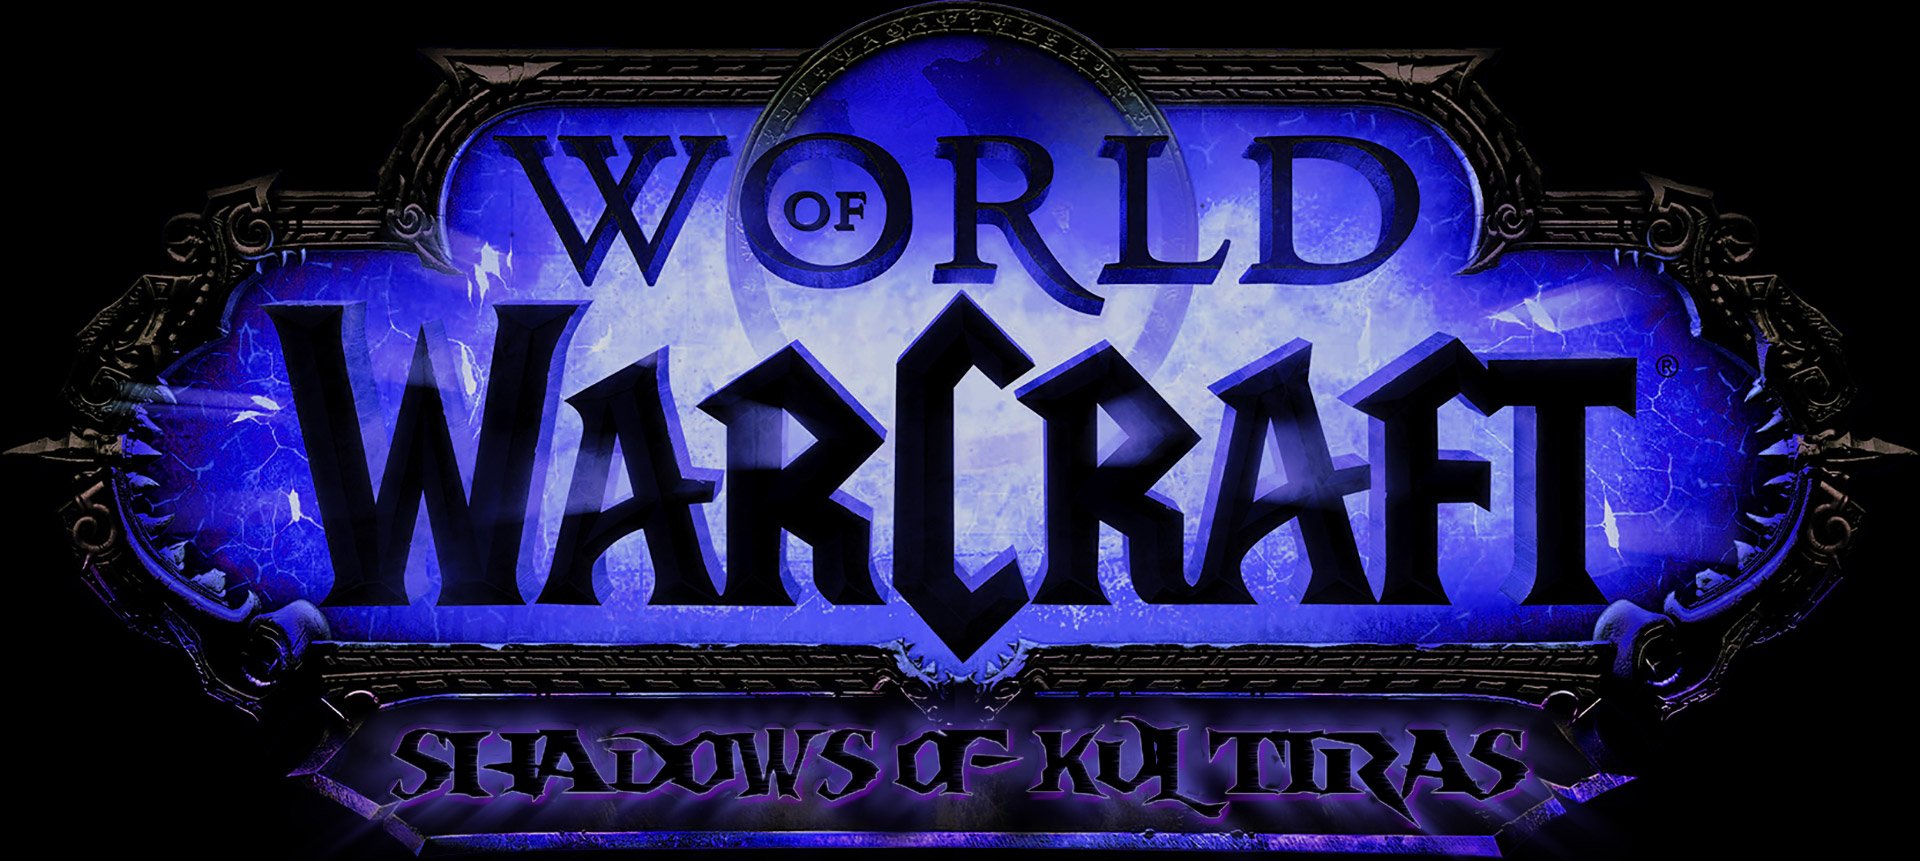 Разгадай wow. World of Warcraft логотип. World of Warcraft надпись. Ворд варкрафт. Ворлд оф варкрафт надпись.